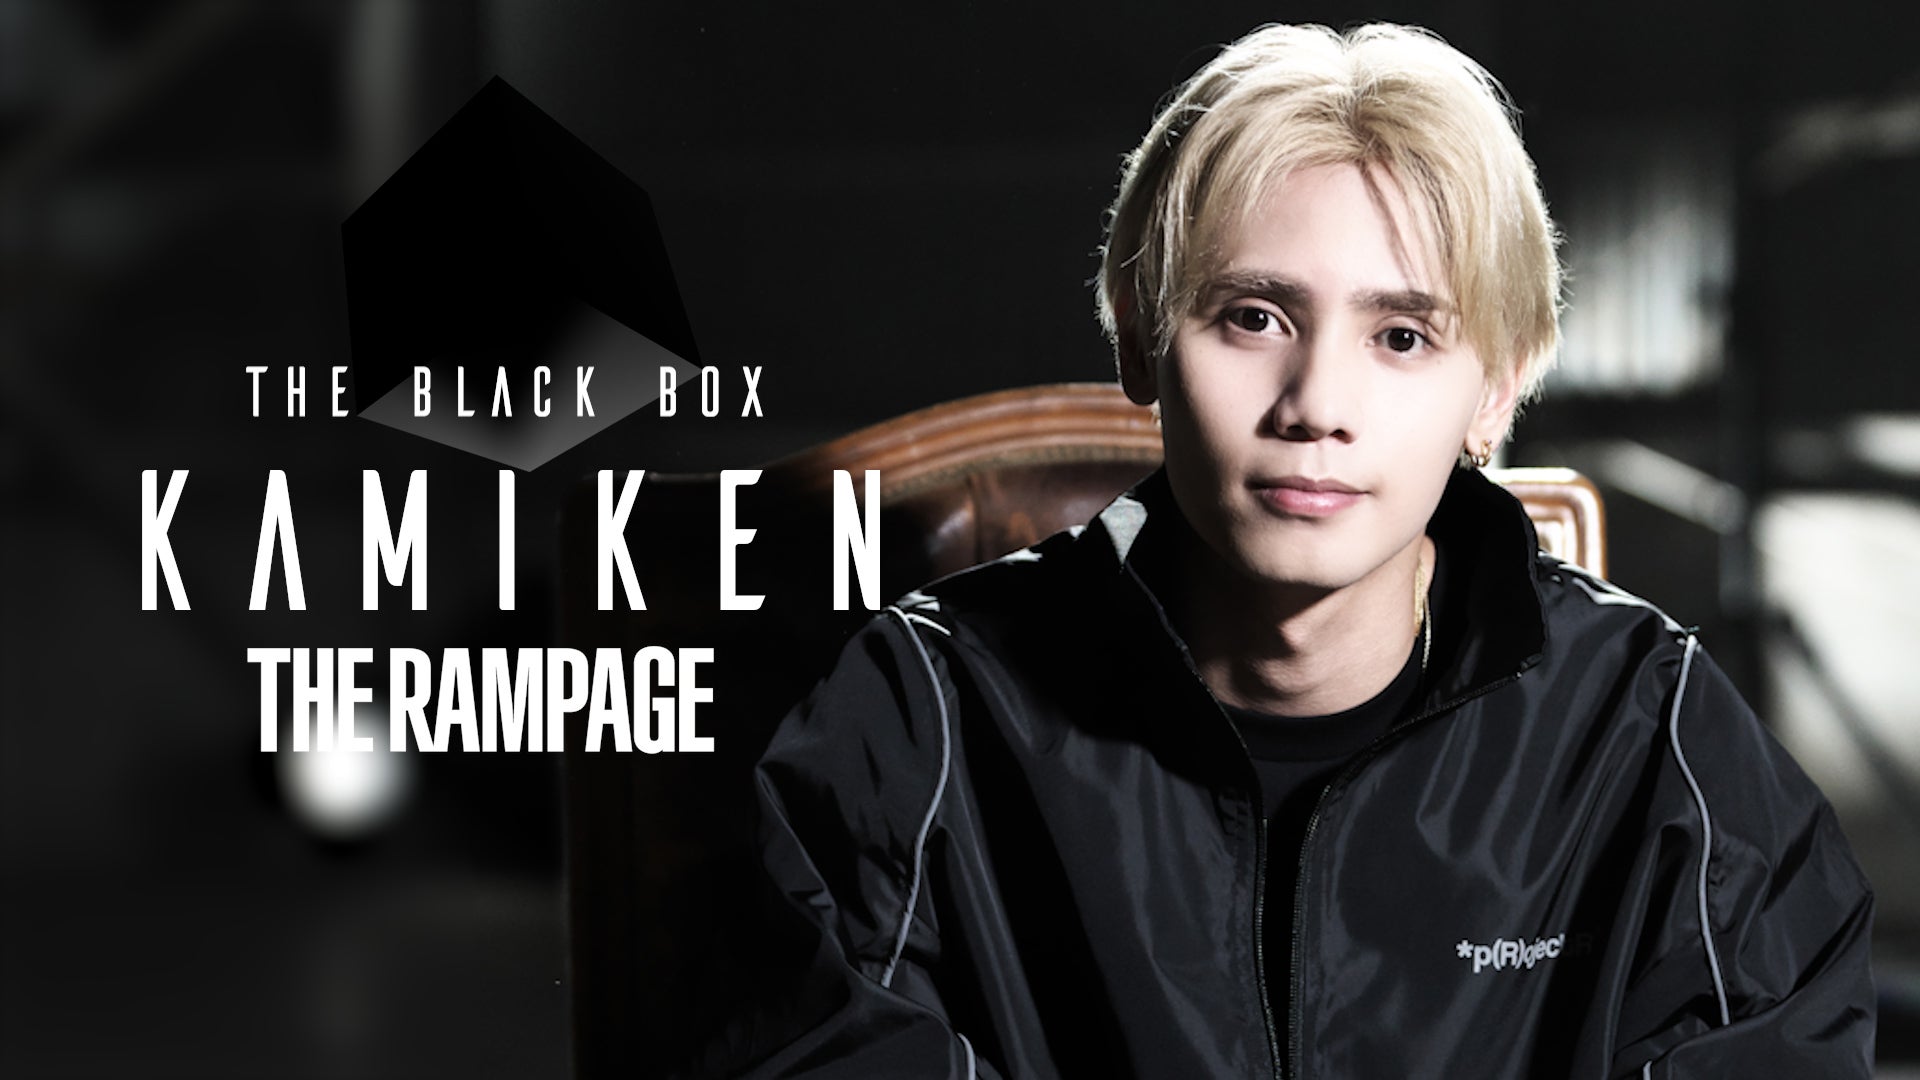 THE BLACK BOX - 神谷健太